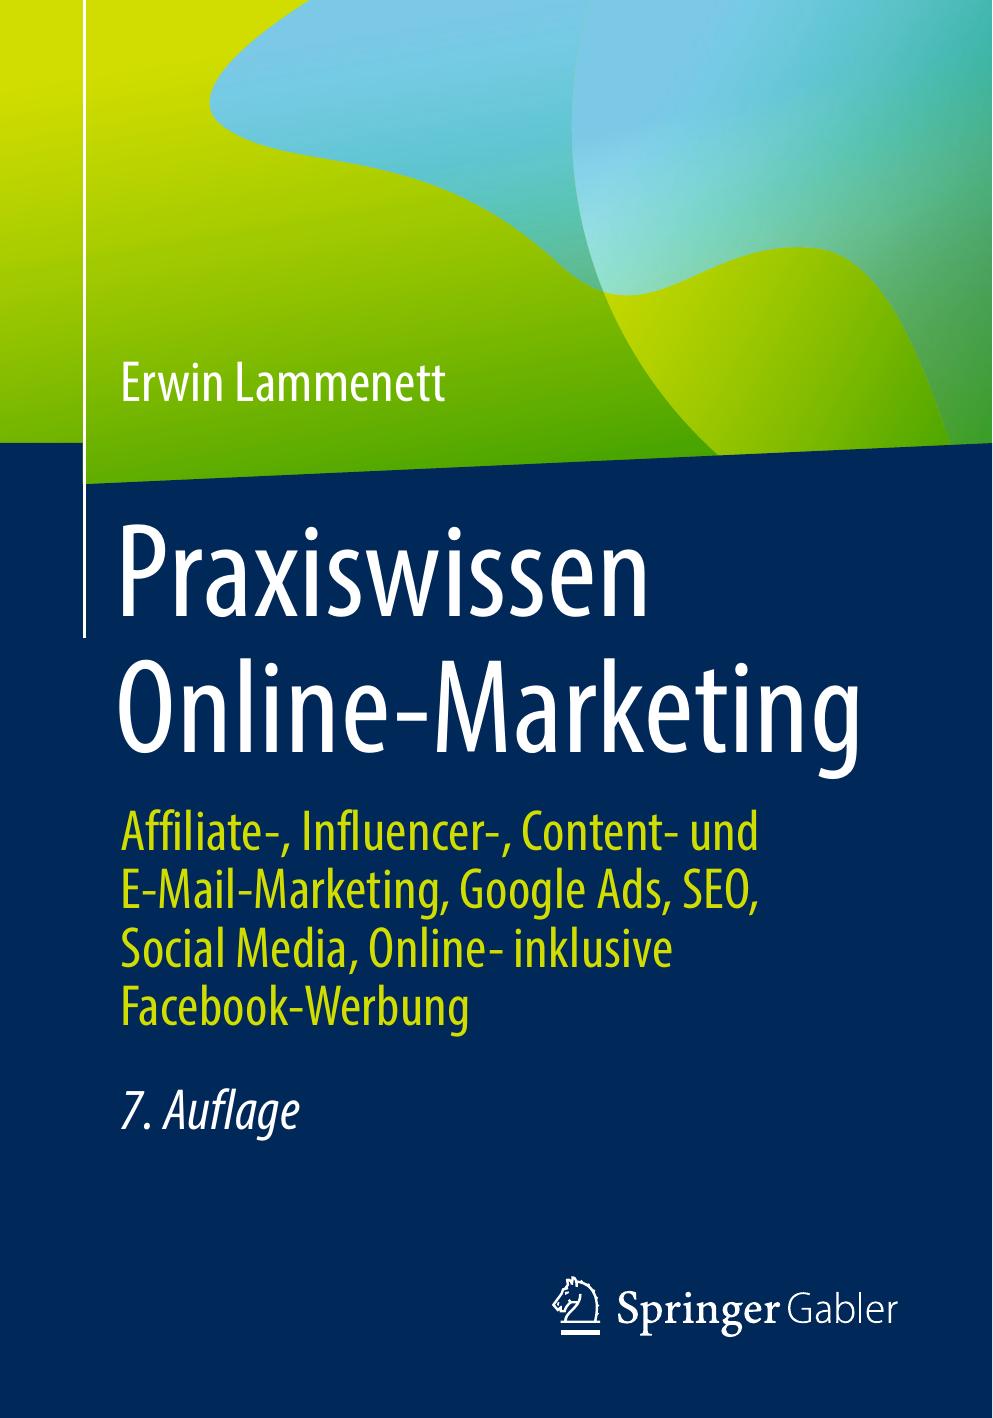 Praxiswissen Online-Marketing: Affiliate-, Influencer-, Content- und E-Mail-Marketing, Google Ads, SEO, Social Media, Online- inklusive Facebook-Werbung